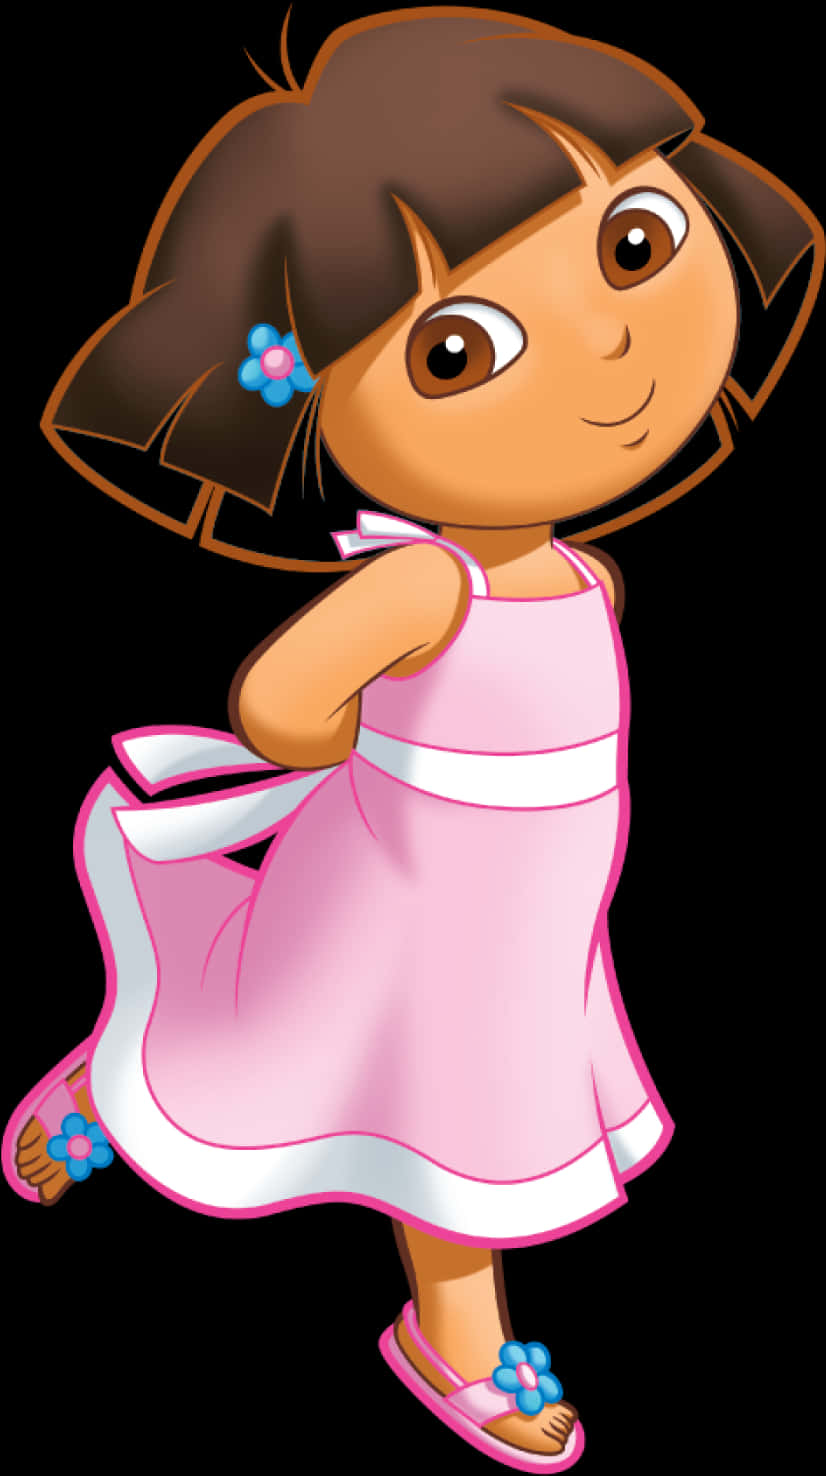 Cartoon Of A Girl In A Pink Dress